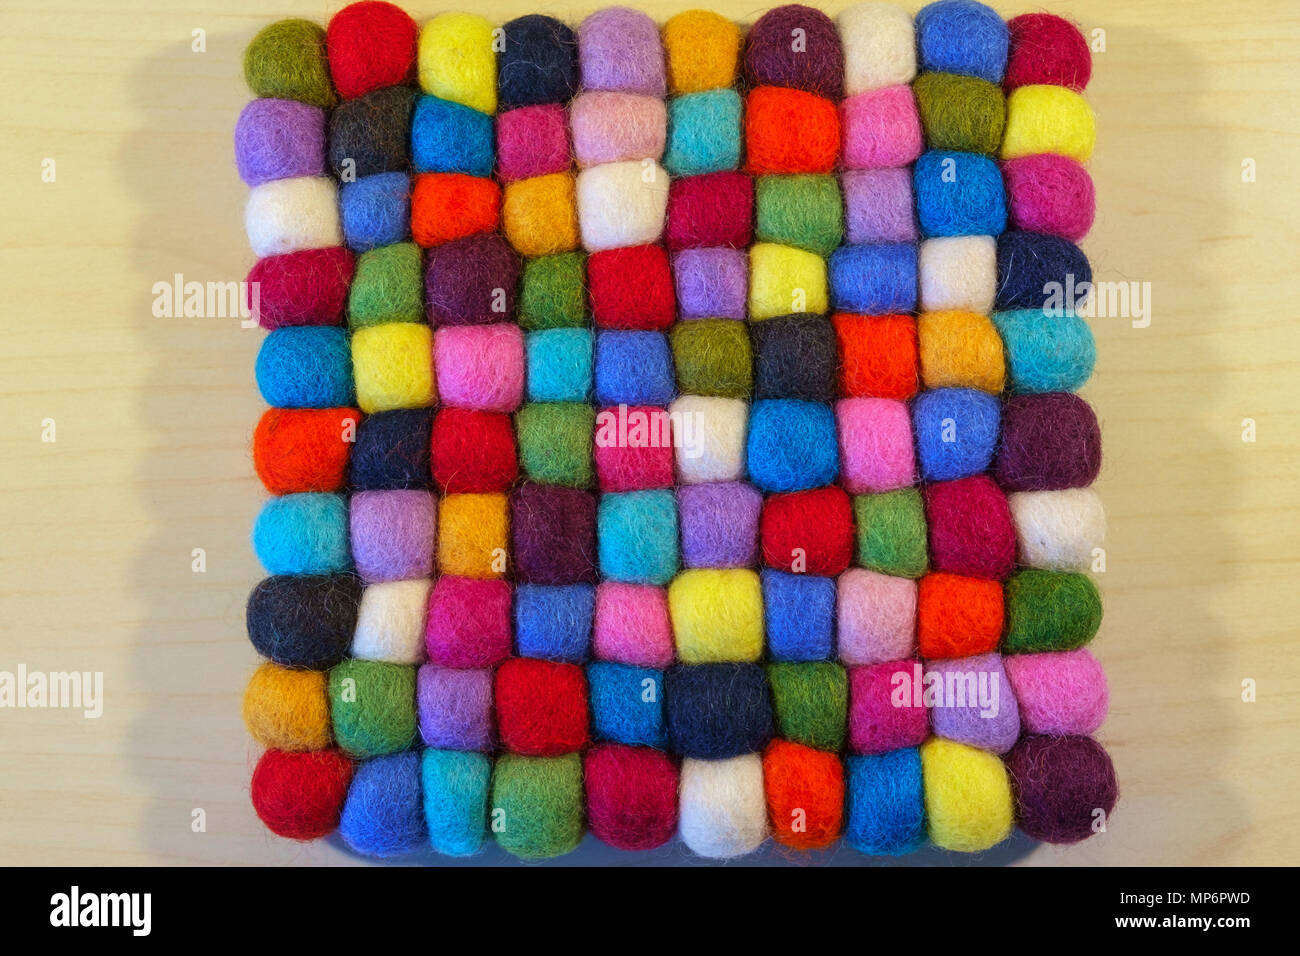 Close up full frame view of a vibrant multi coloured felt booble table mat Stock Photo